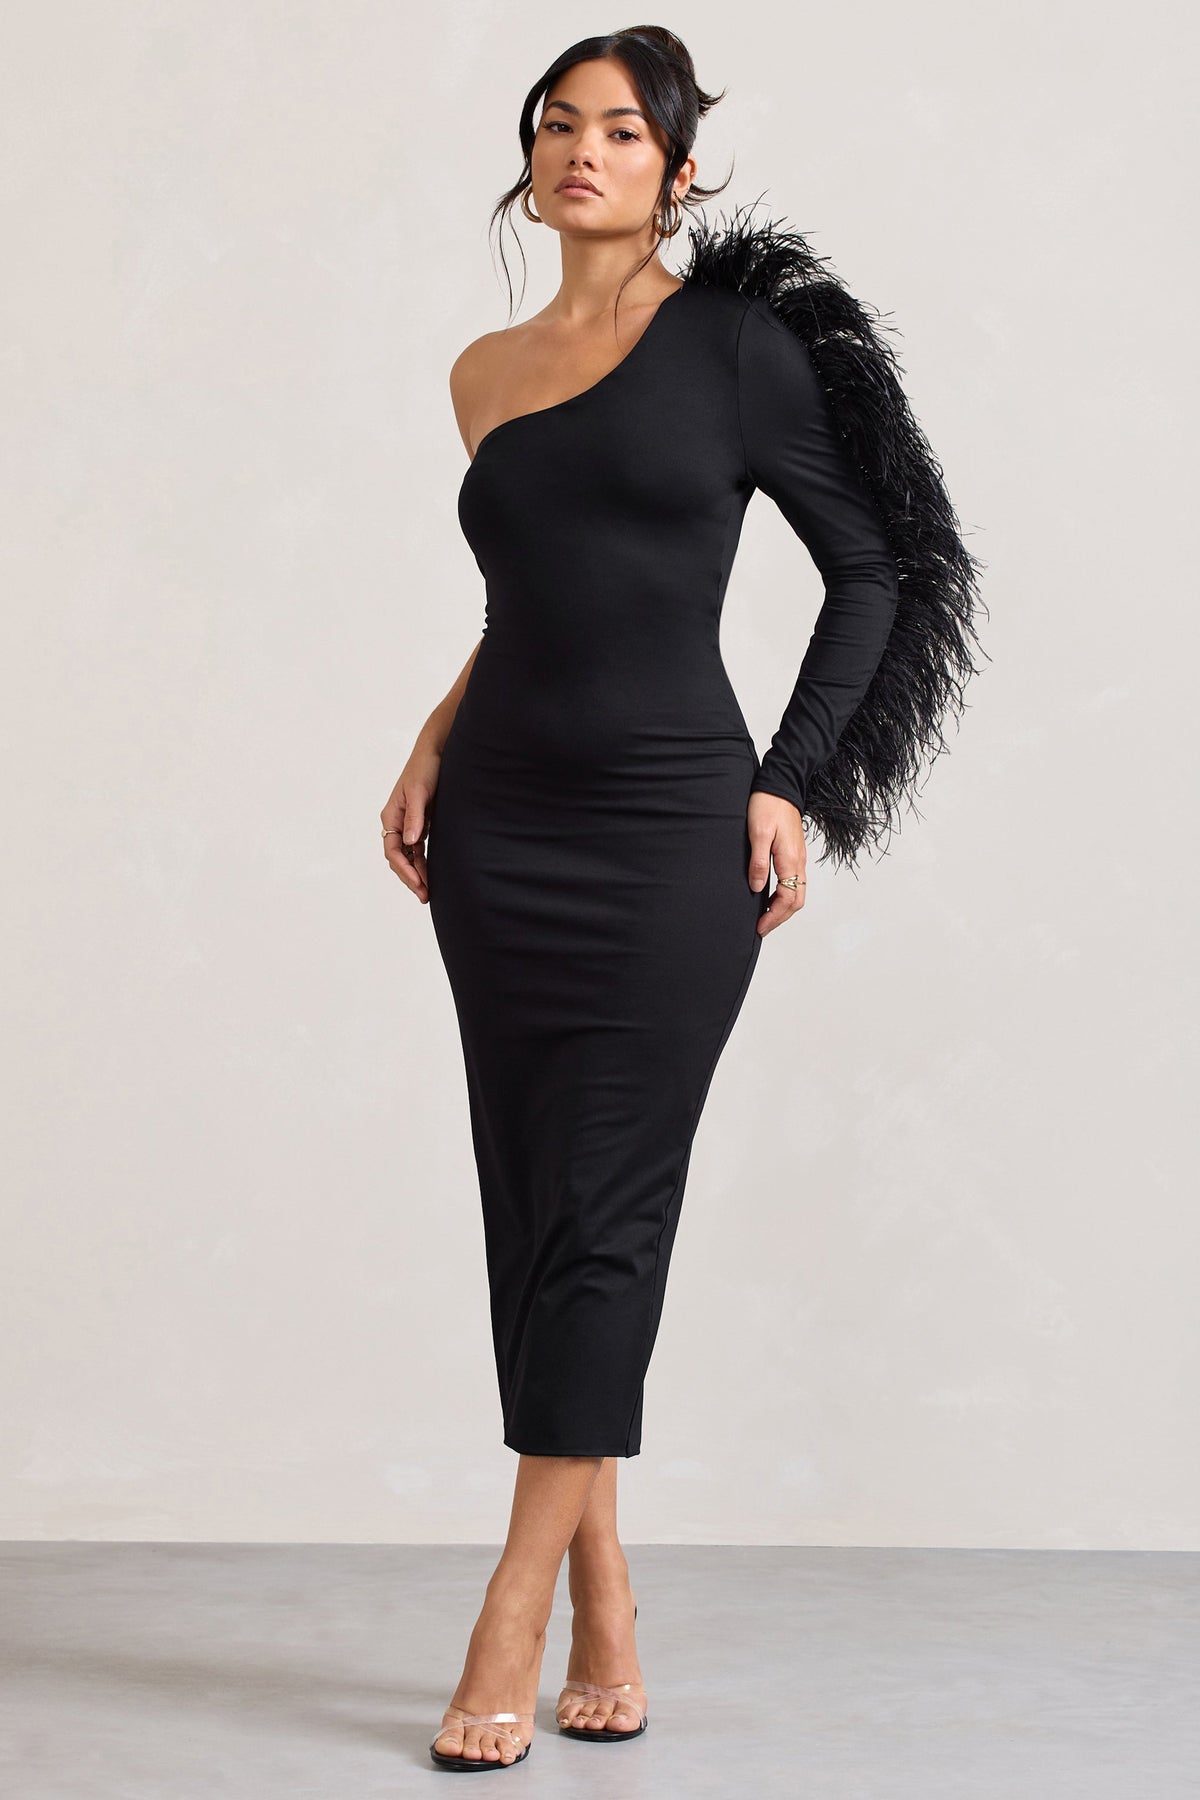 black formal midi dress